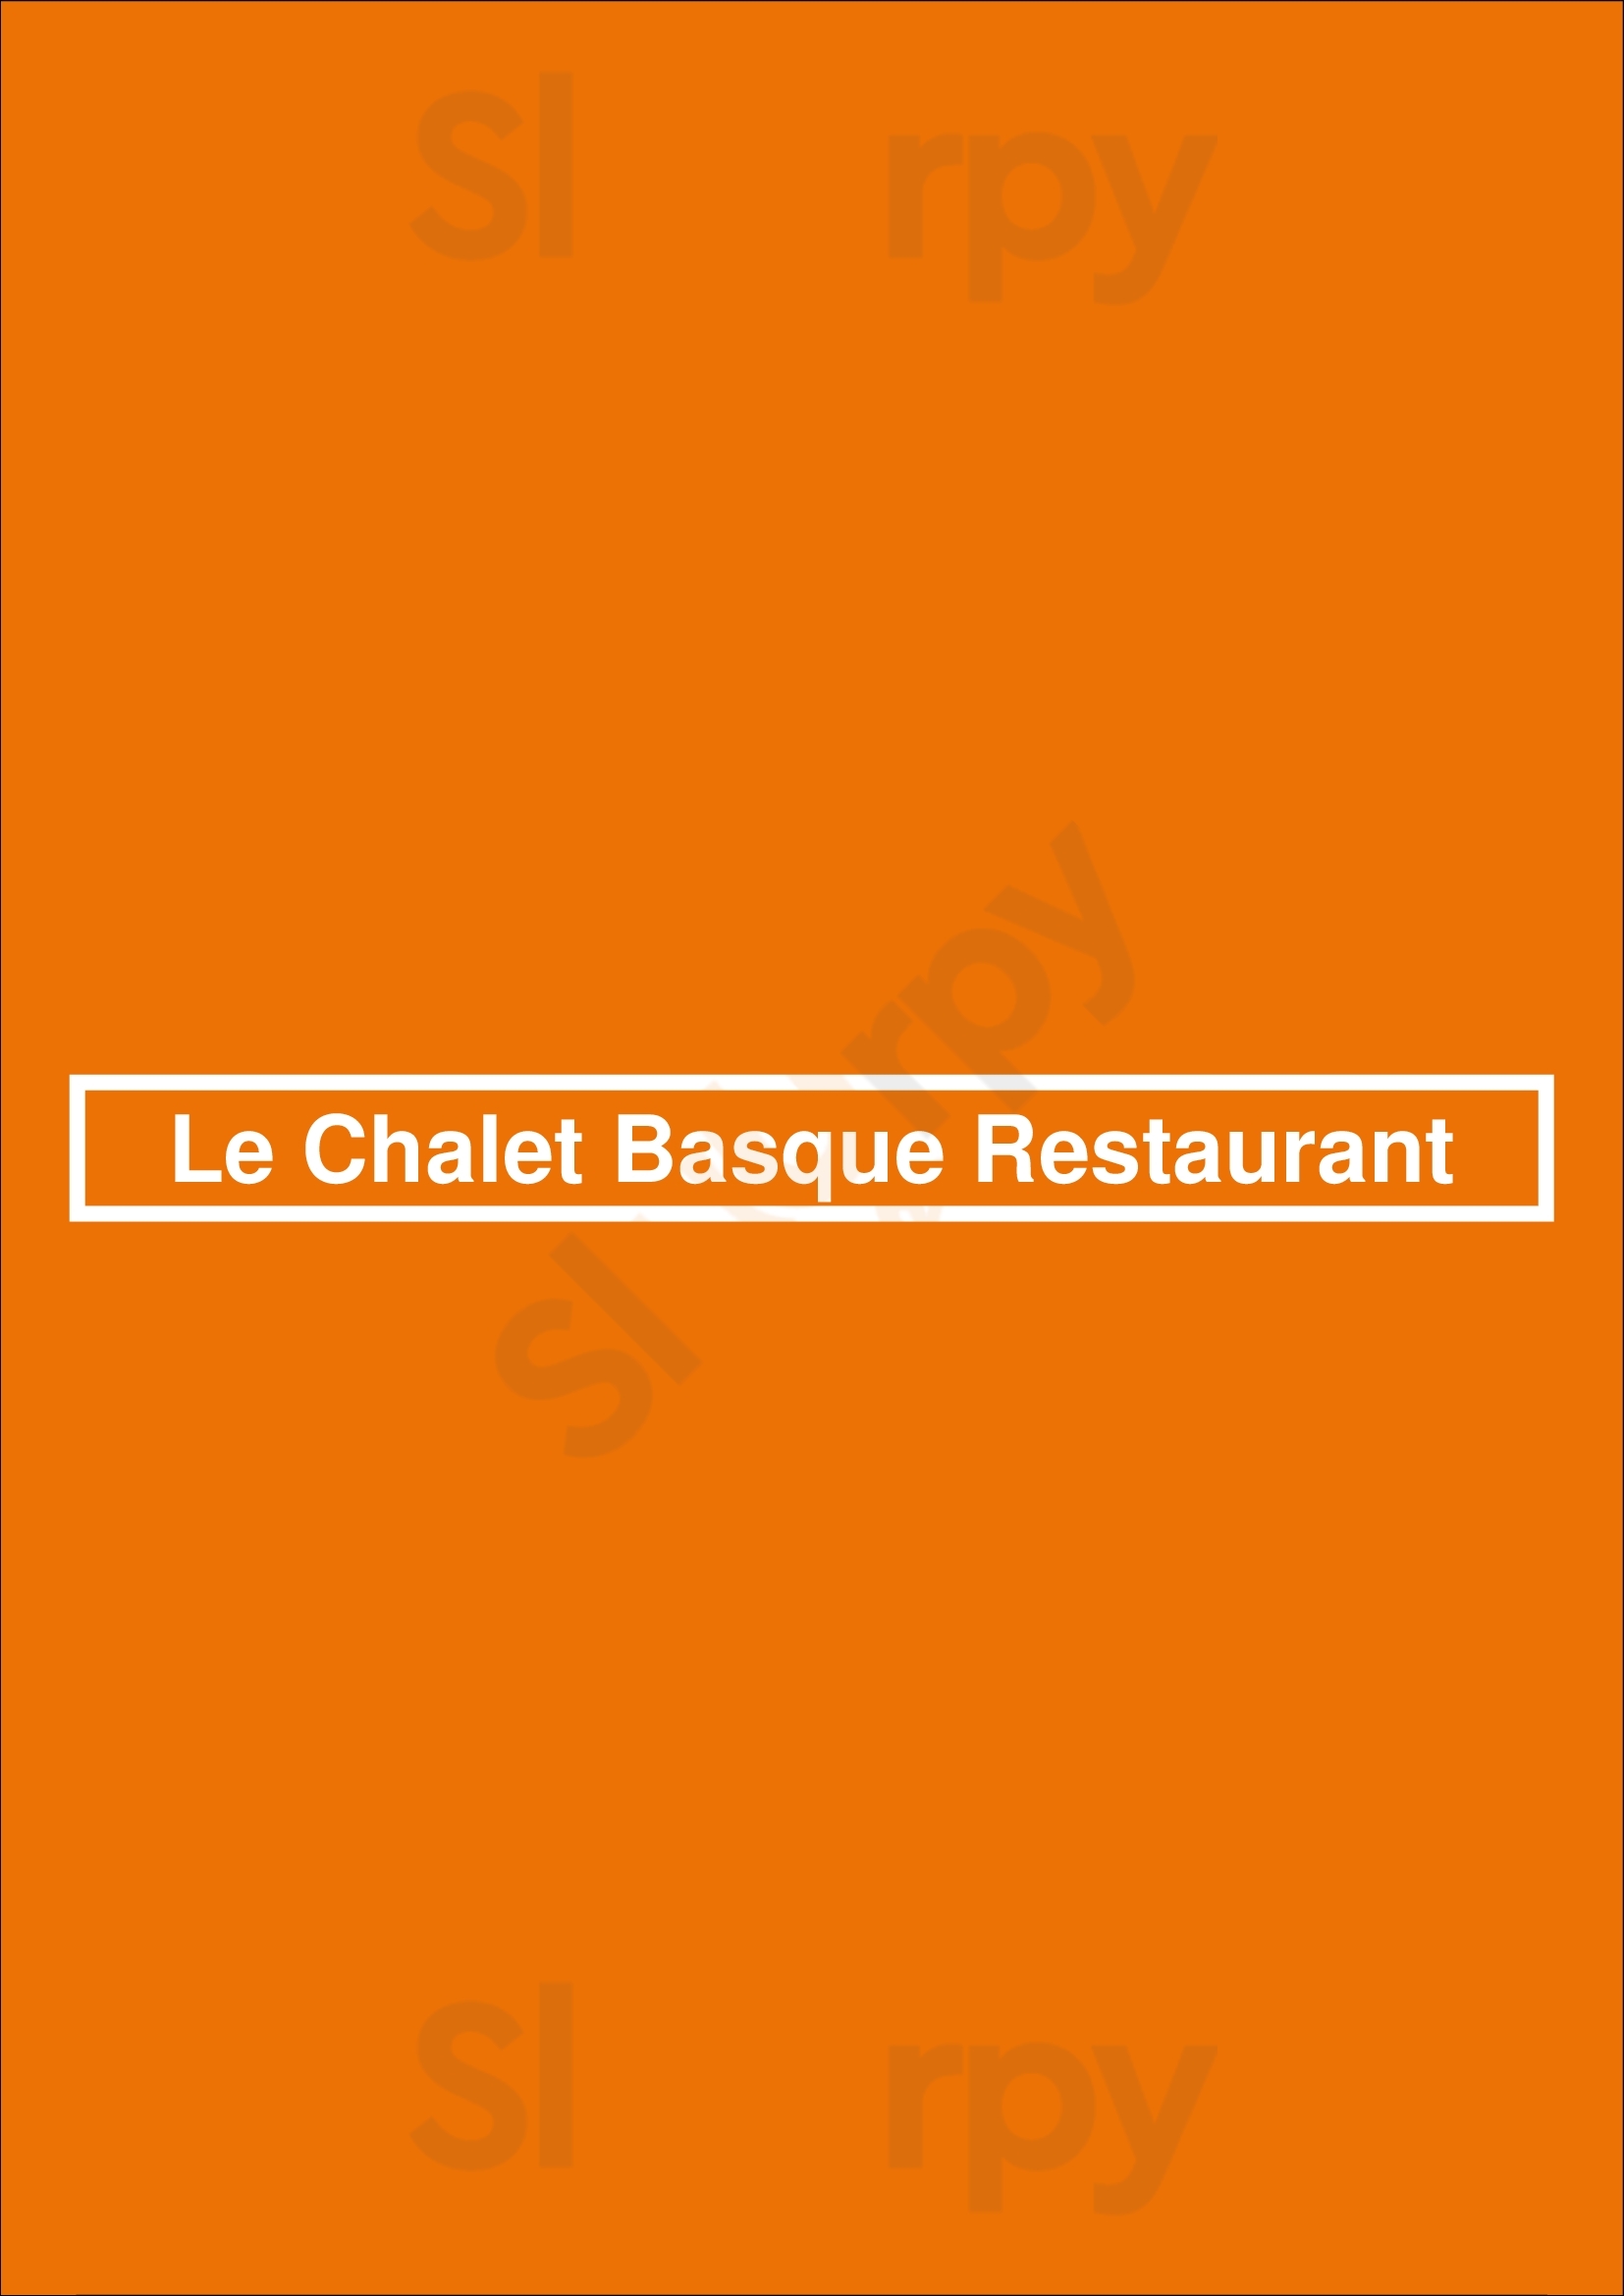 Le Chalet Basque Restaurant San Rafael Menu - 1